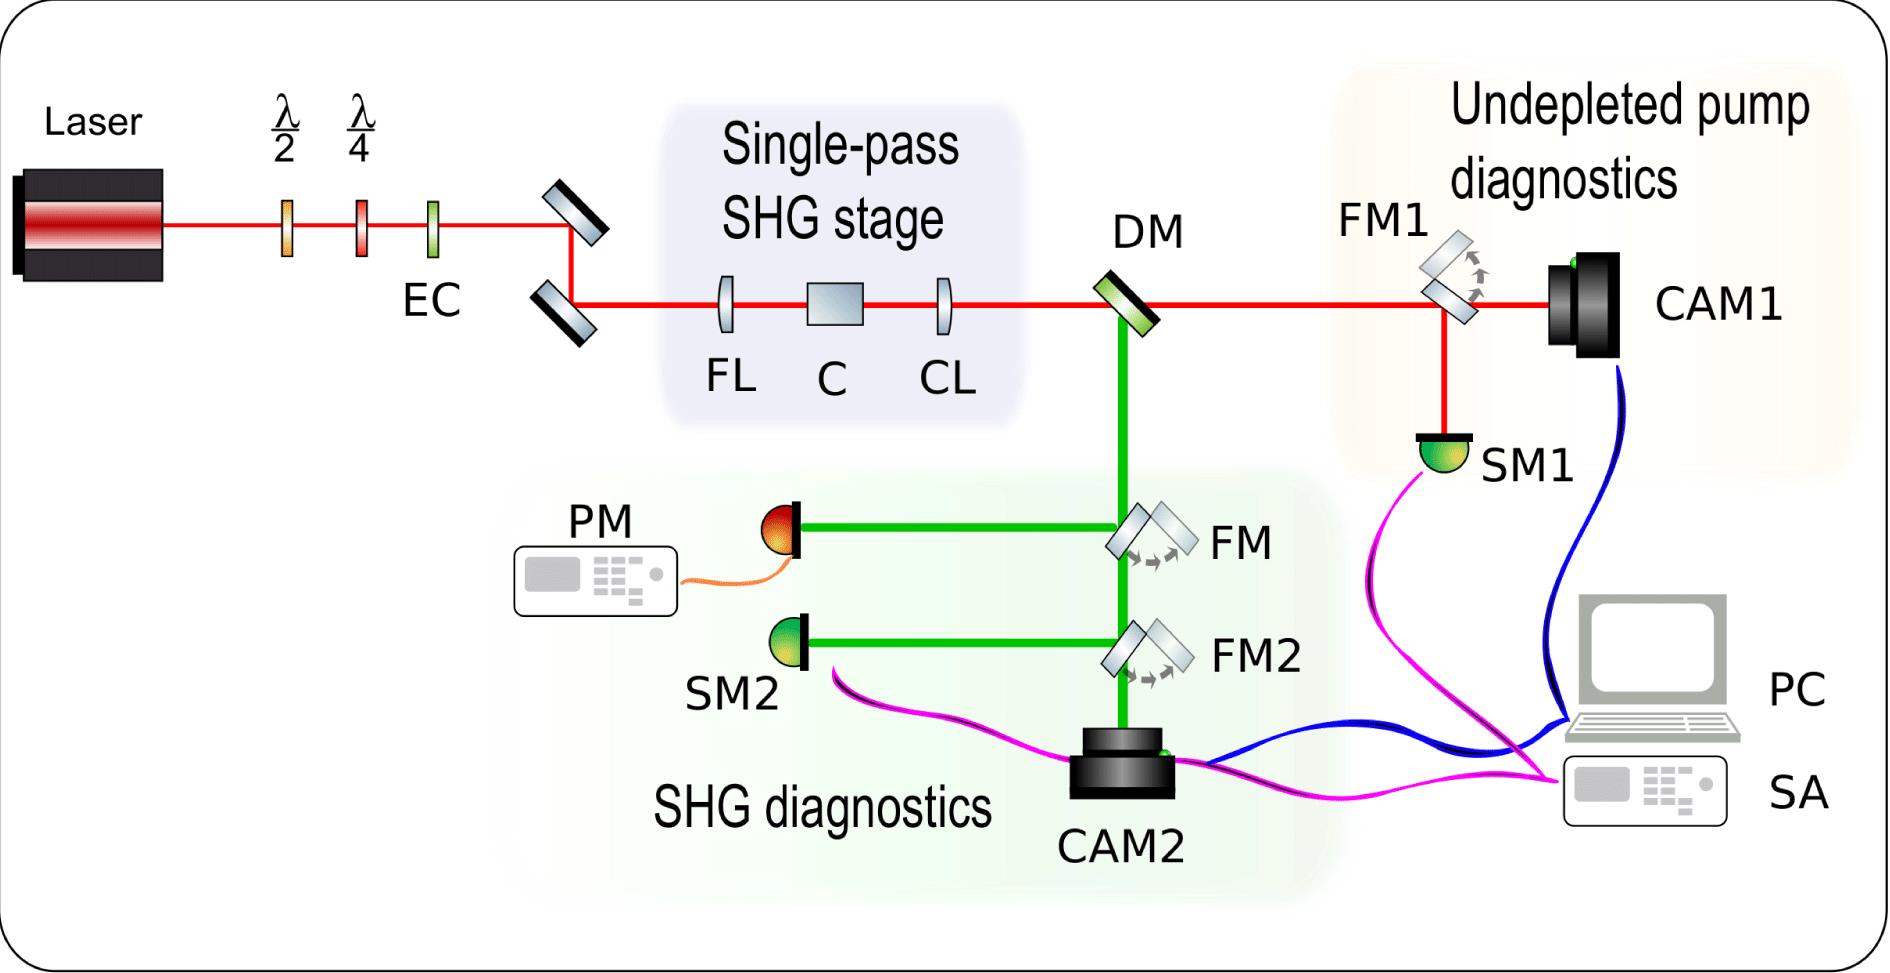 Experimental setup in SHG experiment. $\unicode[STIX]{x1D706}/2,\unicode[STIX]{x1D706}/4$: waveplates; EC: pump energy control; FL: focusing lens; C: nonlinear crystal; CL: collimating lens; DM: dichroic mirror; FM: flip mirror; SM: spectrometer; CAM: camera; PM: power meter; SA: spectrum analyzer; PC: computer.